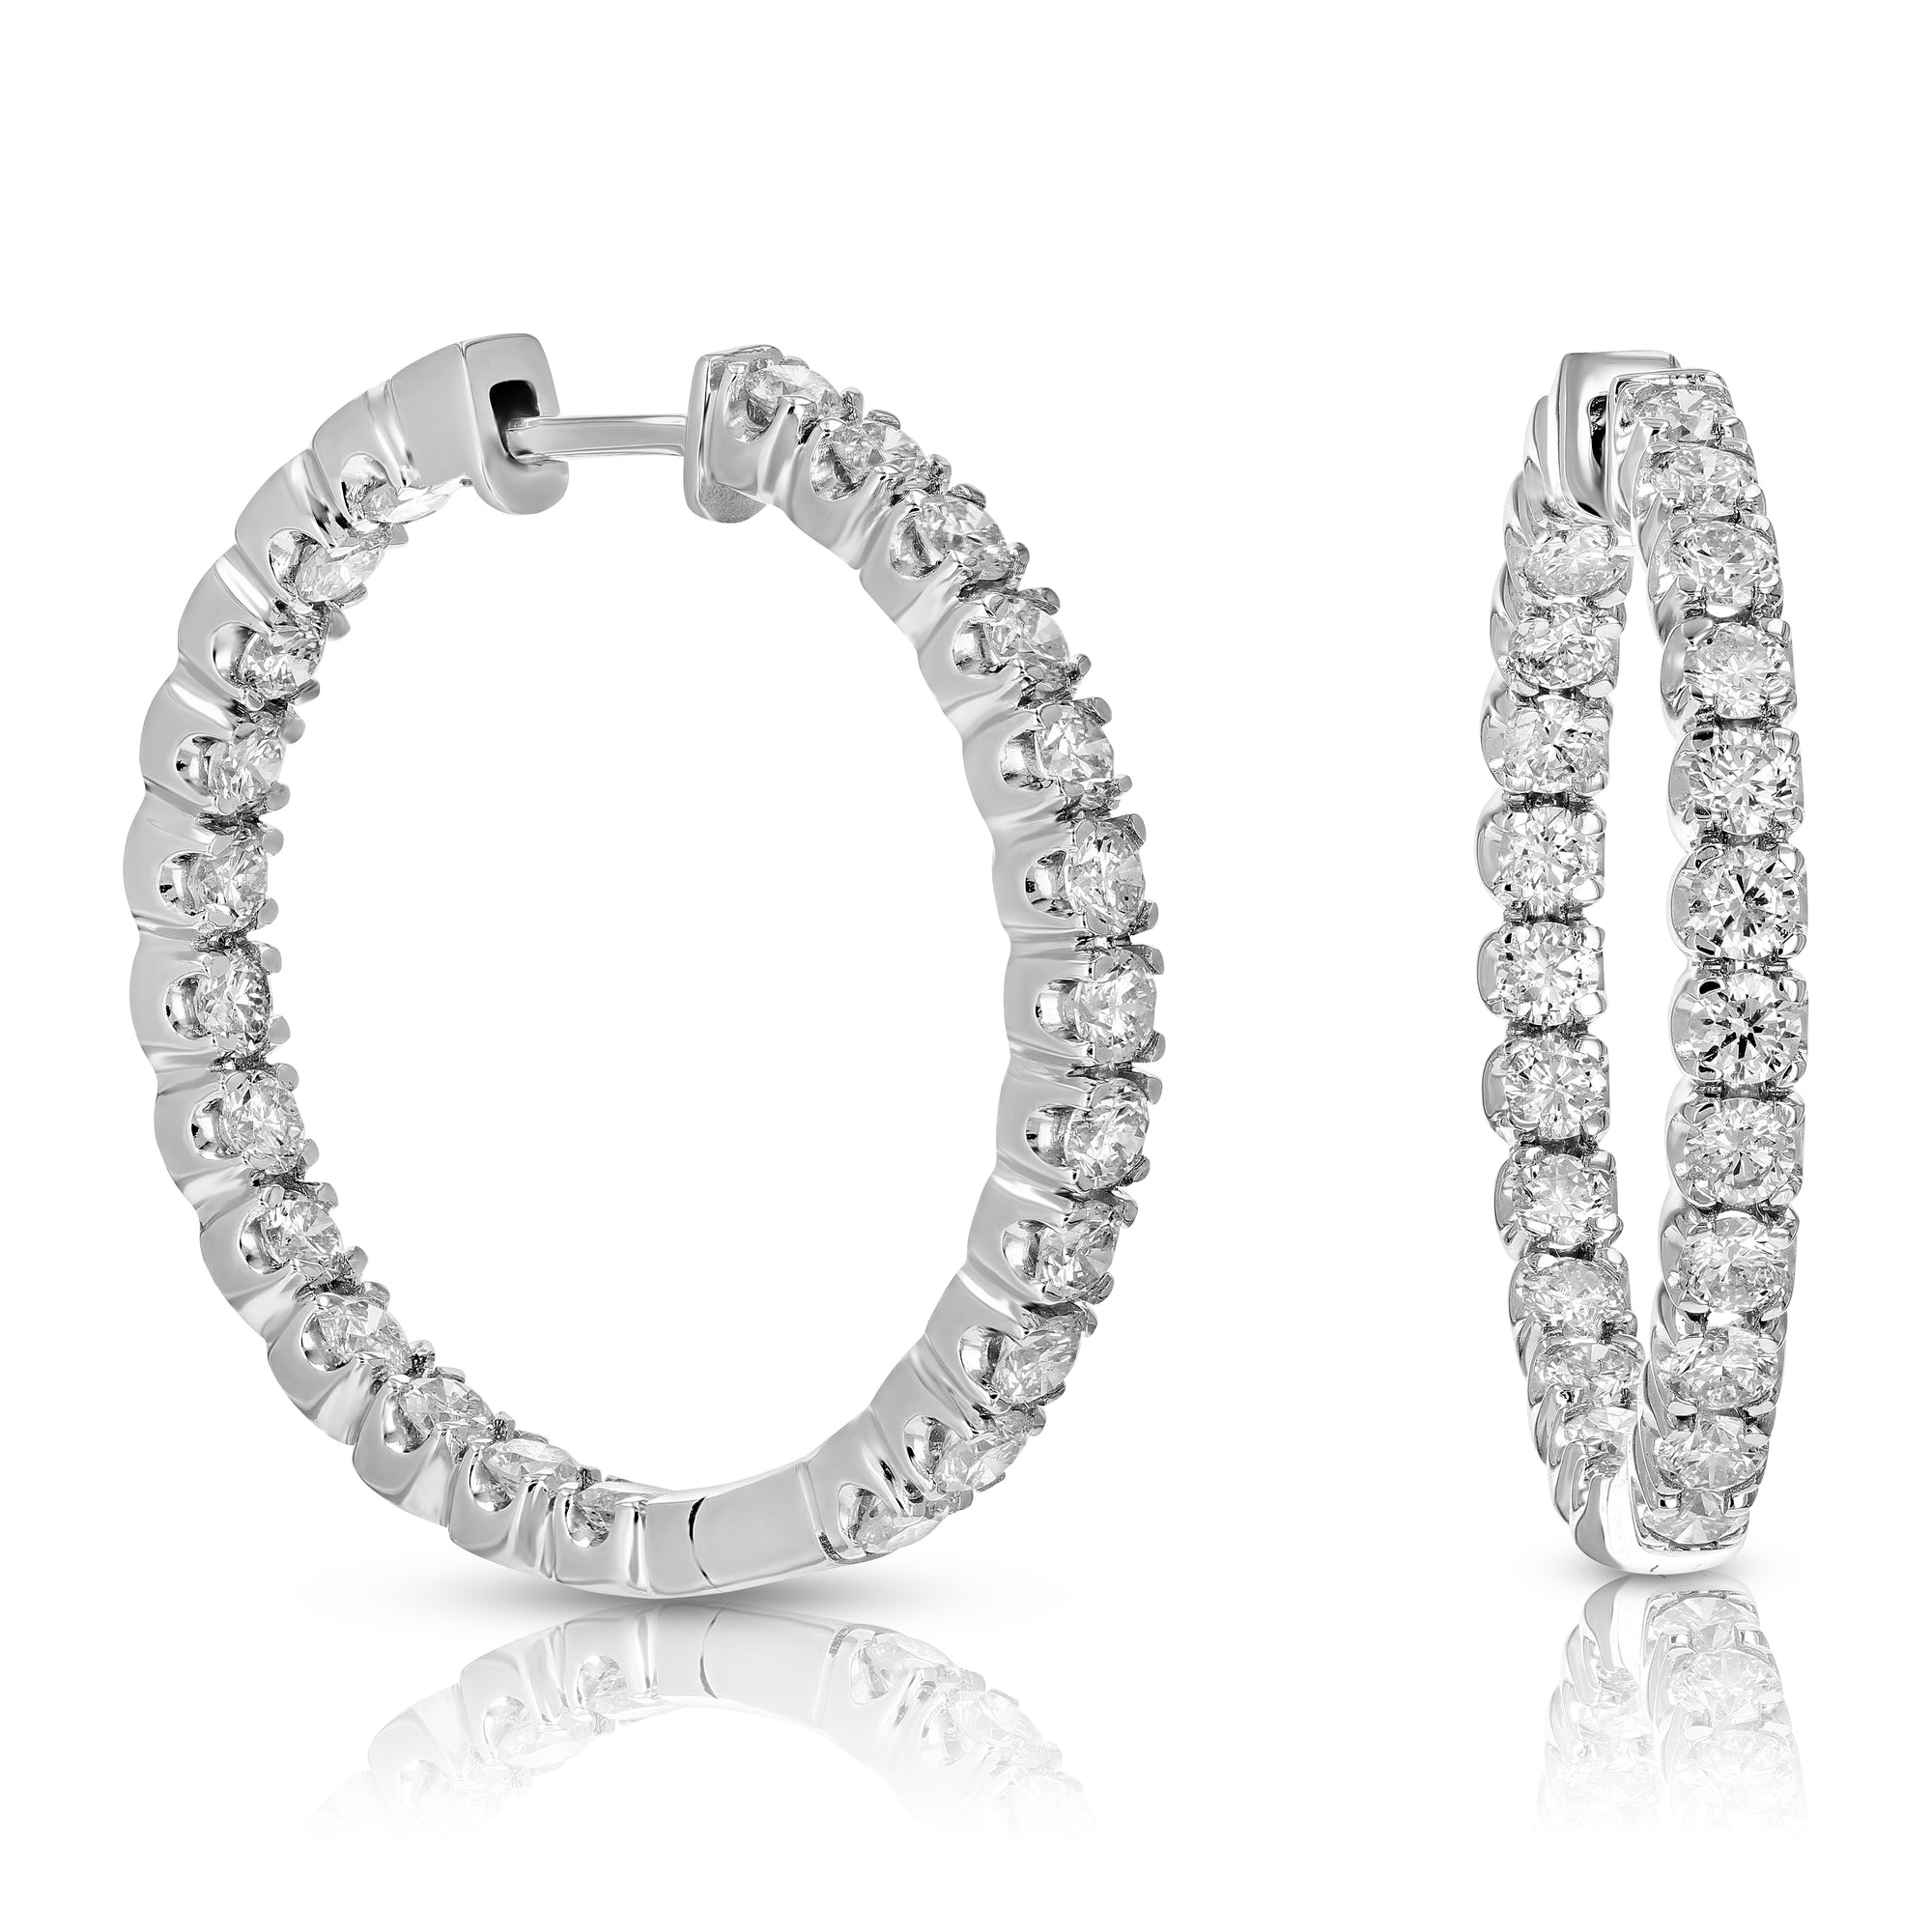 5 cttw SI2-I1 Certified Diamond Hoop Earrings 14K White Gold Inside Out 1.38 inch